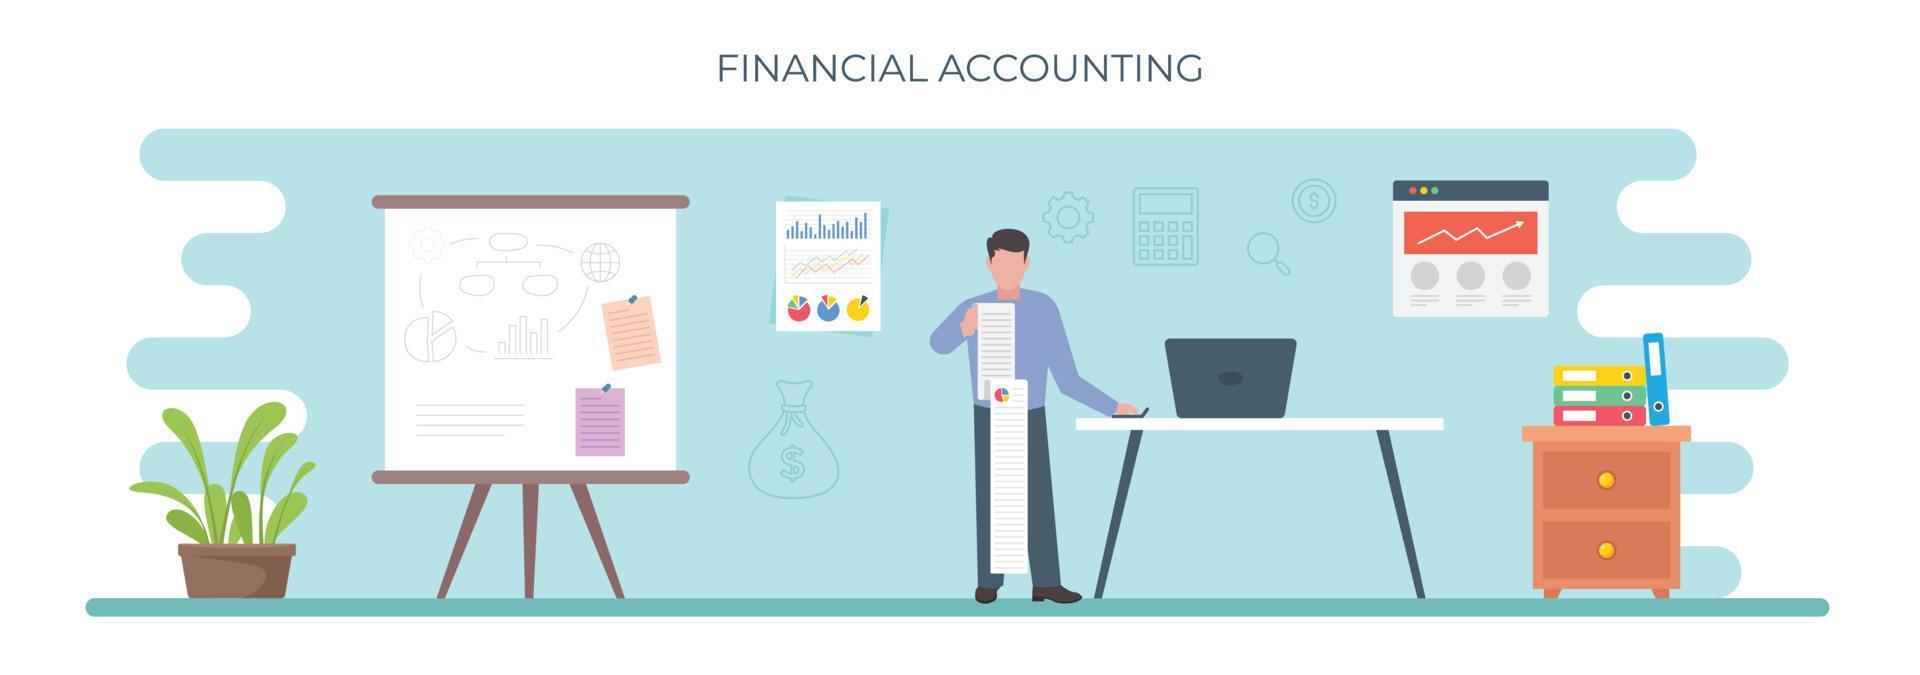 modieus financieel accounting vector